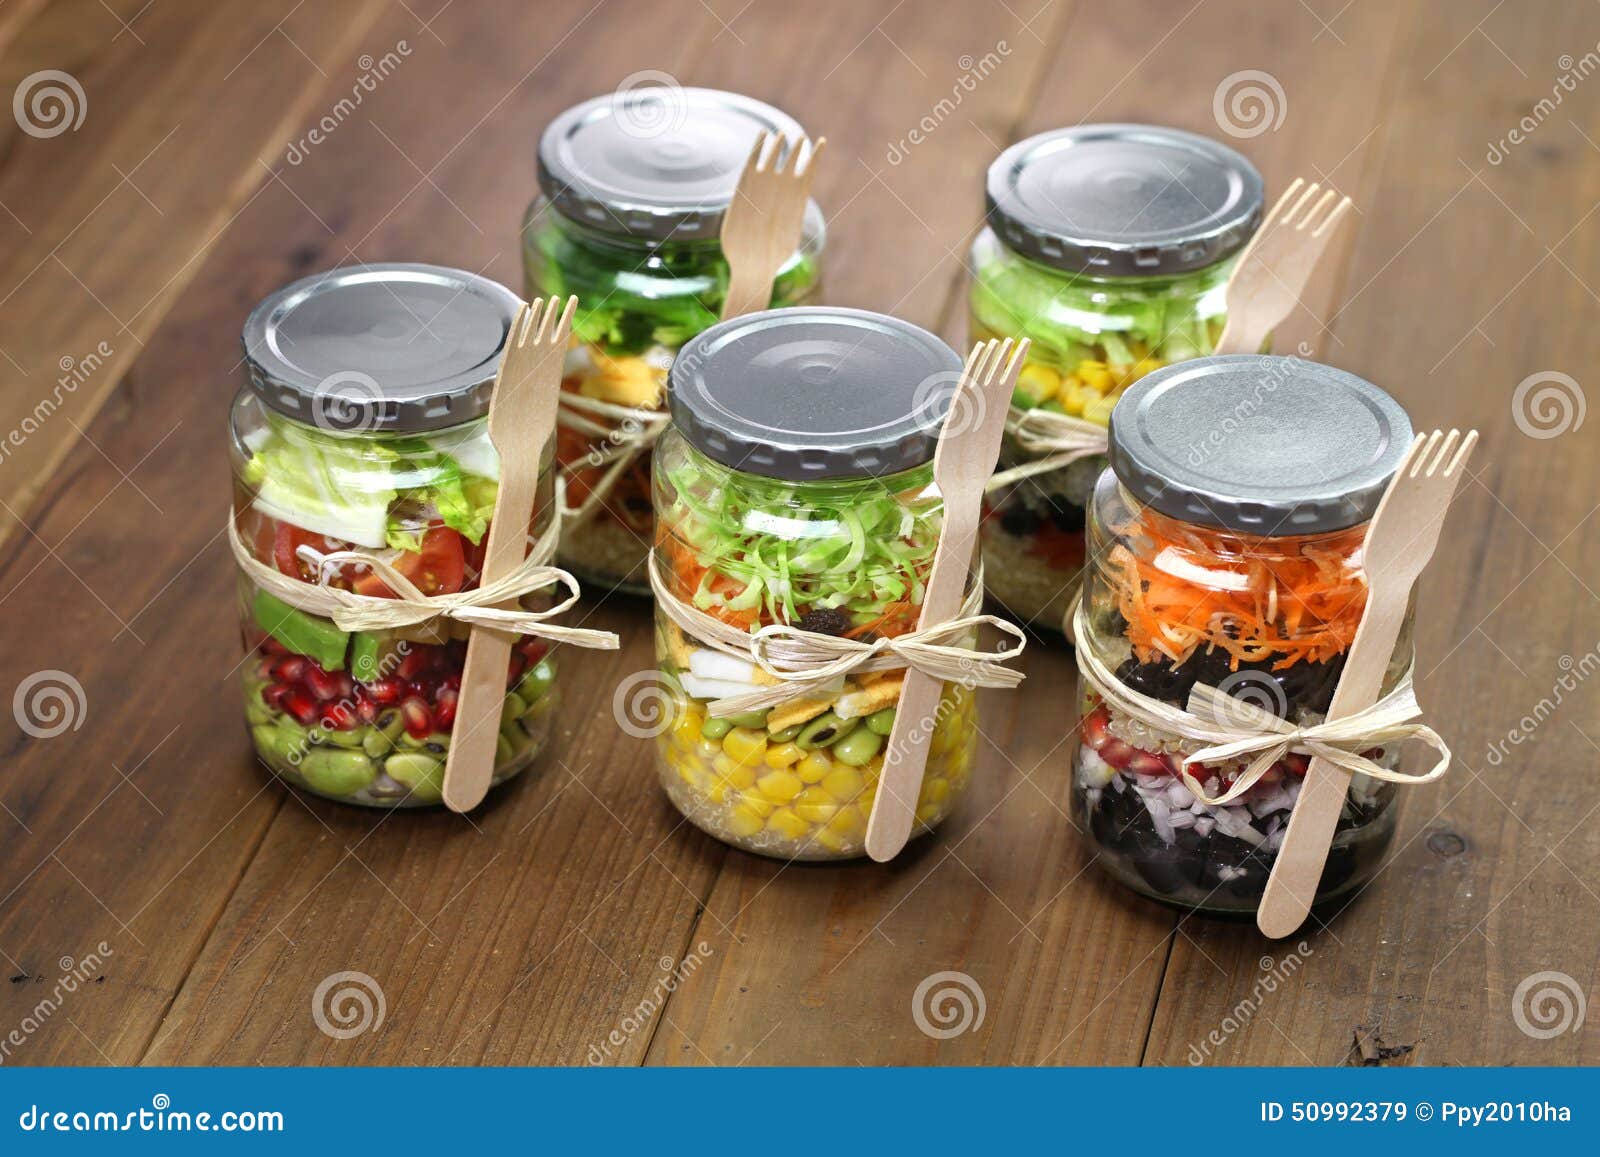 https://thumbs.dreamstime.com/z/salad-glass-jar-homemade-healthy-50992379.jpg